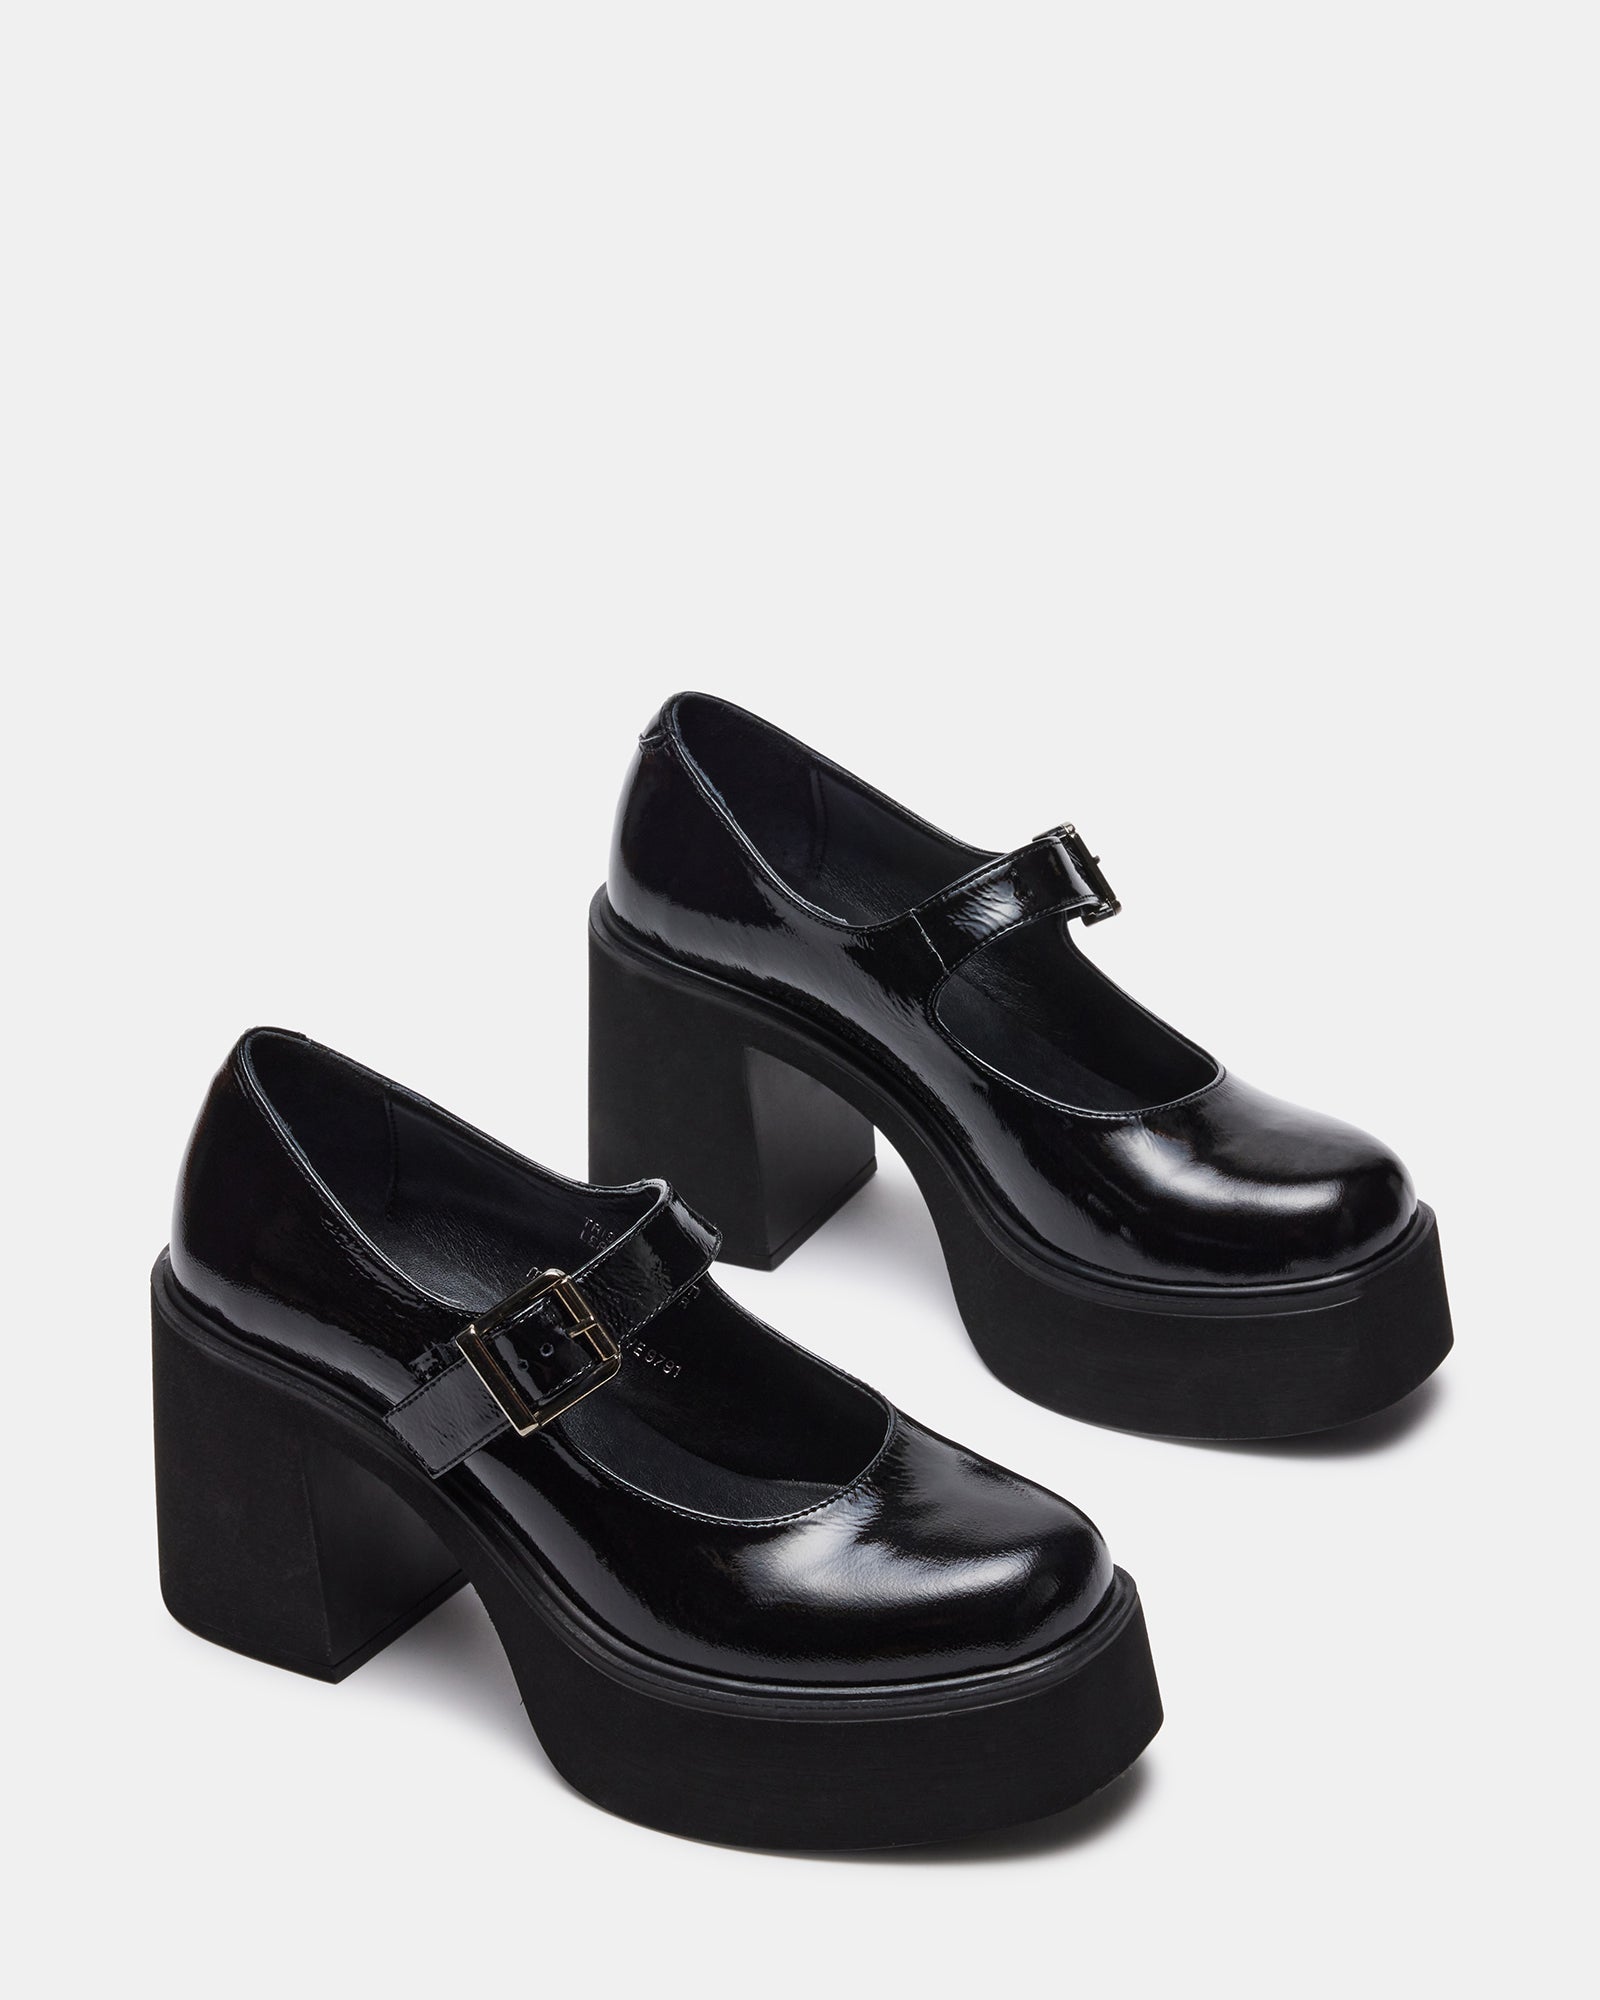 TRISH Black Patent Mary Jane Block Heel Loafer | Women's Loafers ...